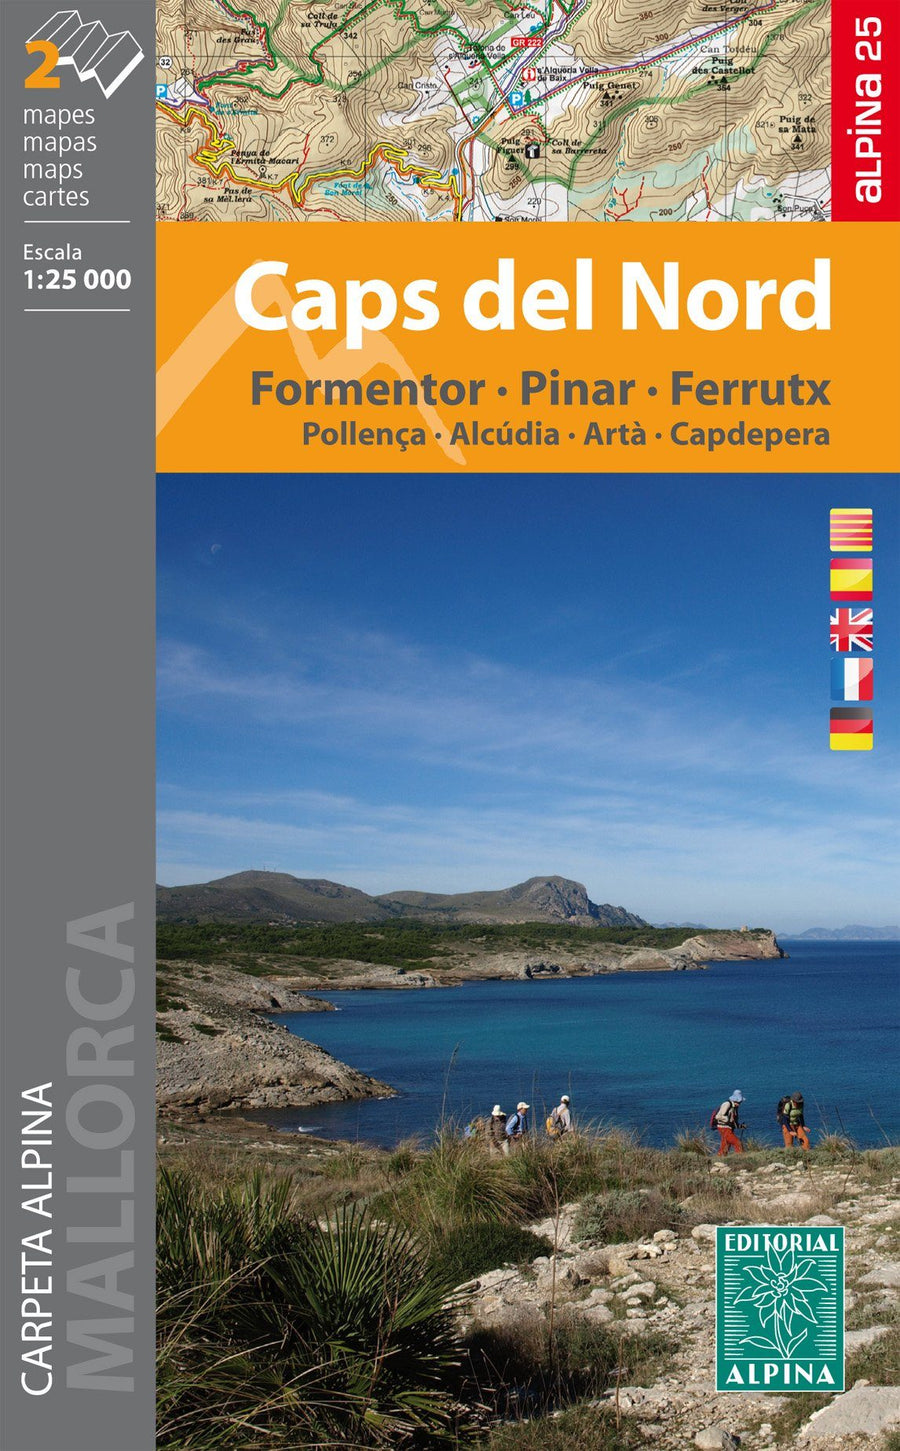 Lot de 2 cartes de randonnée - Caps del Nord, Formentor, Pinar, Ferrutx (Majorque, Iles Baléares) | Alpina carte pliée Editorial Alpina 